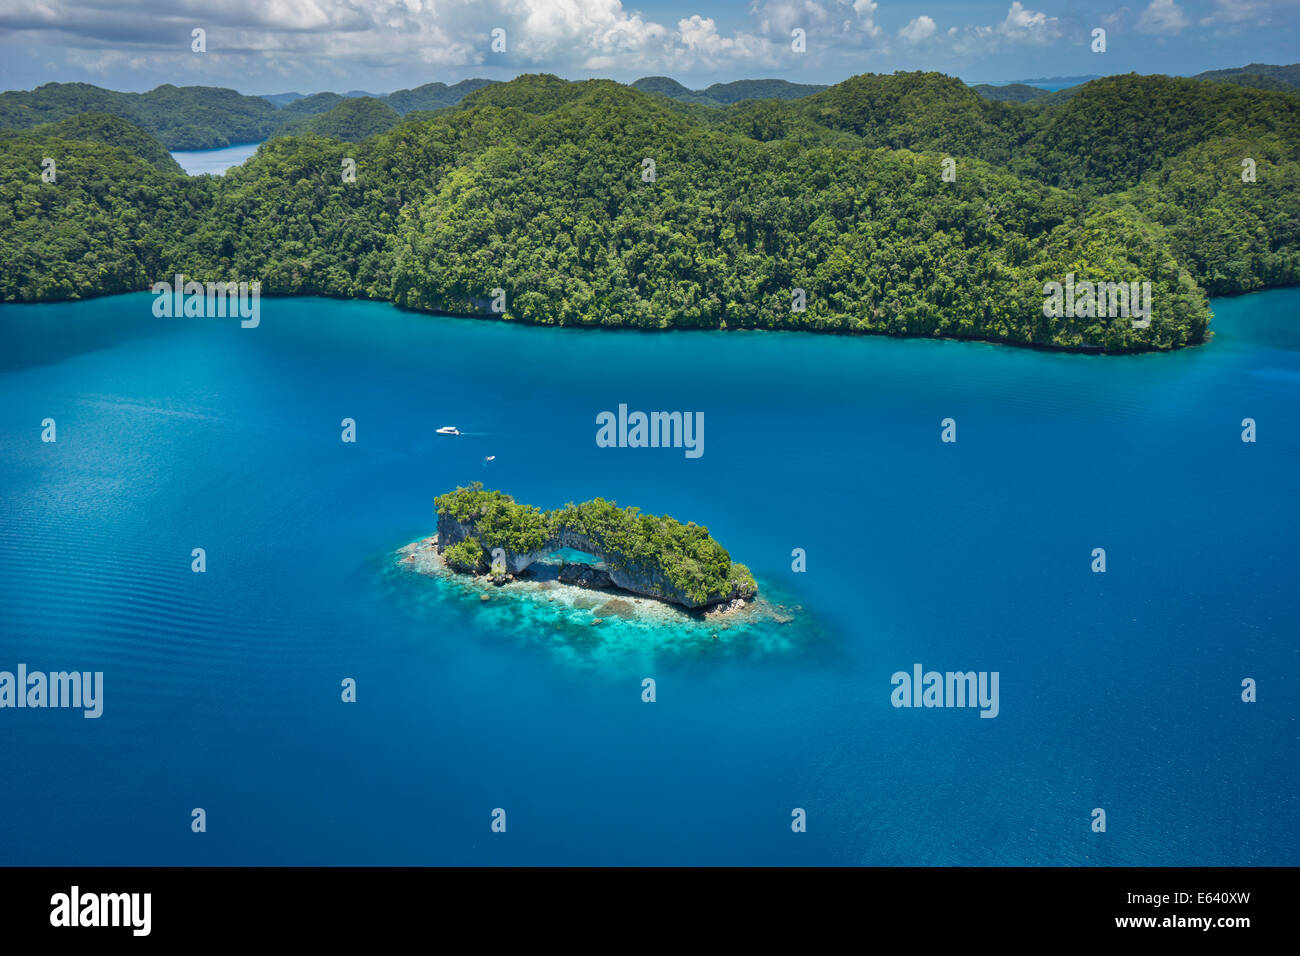 Die Arche, Insel Paradies Palau, Mikronesien Stockfoto